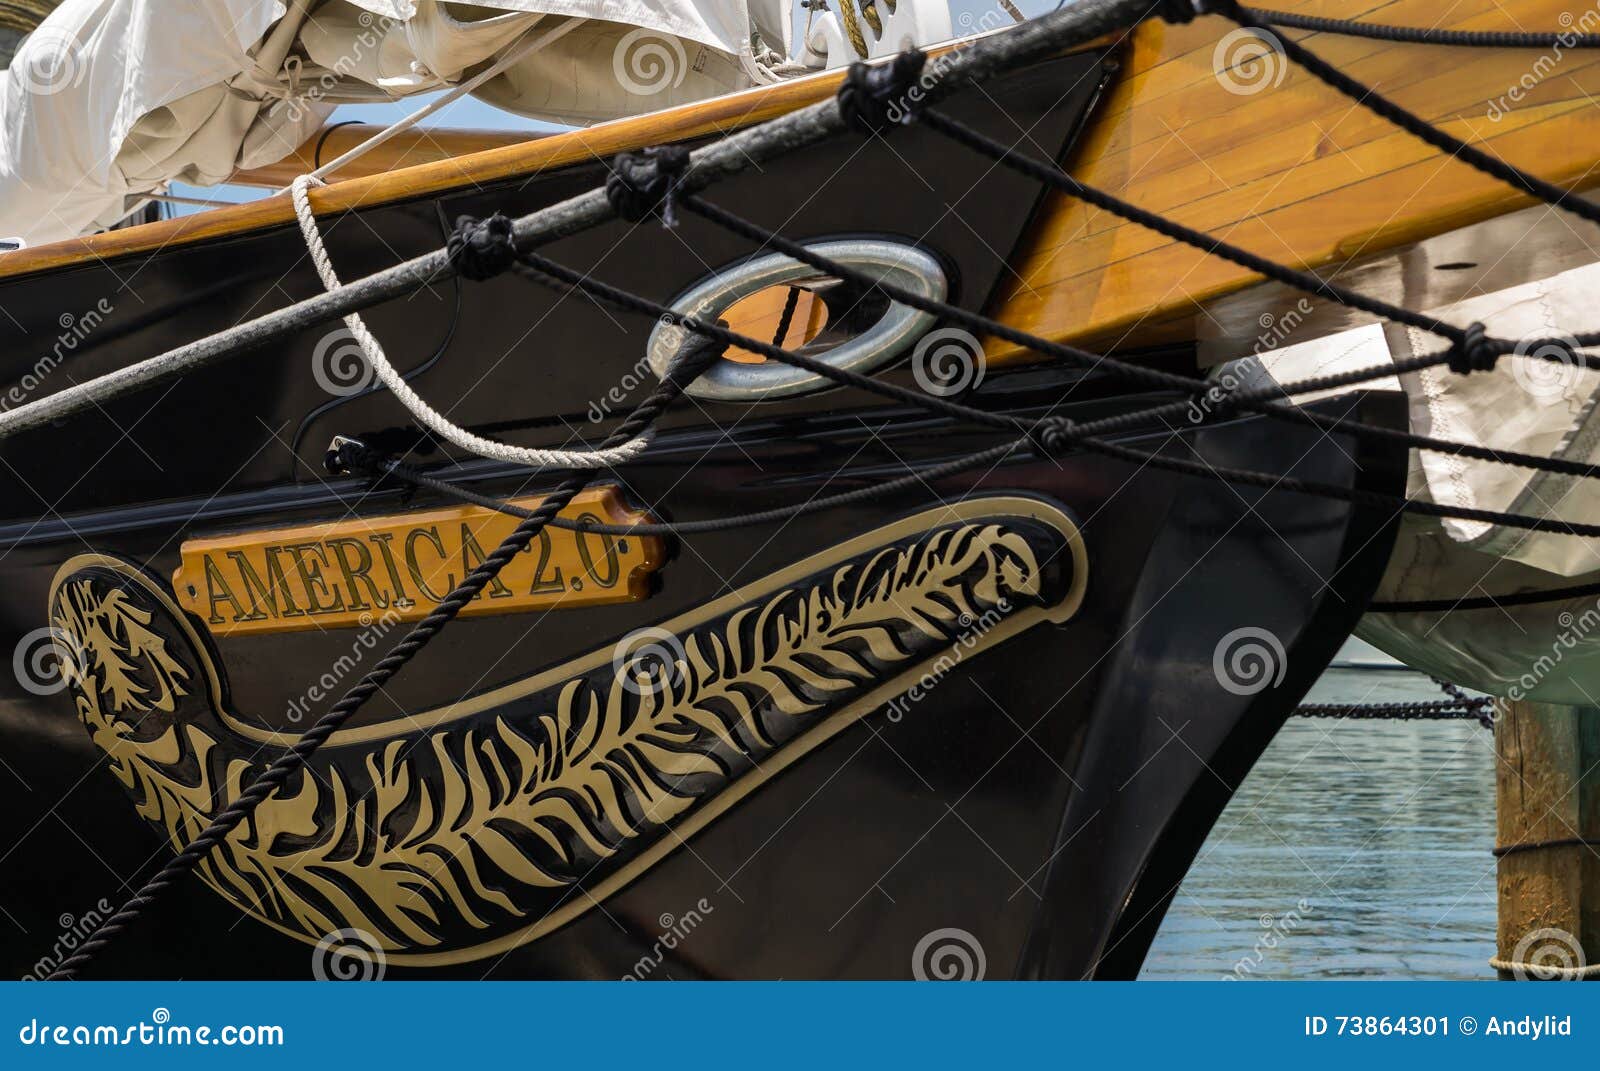 america 2 sailboat key west